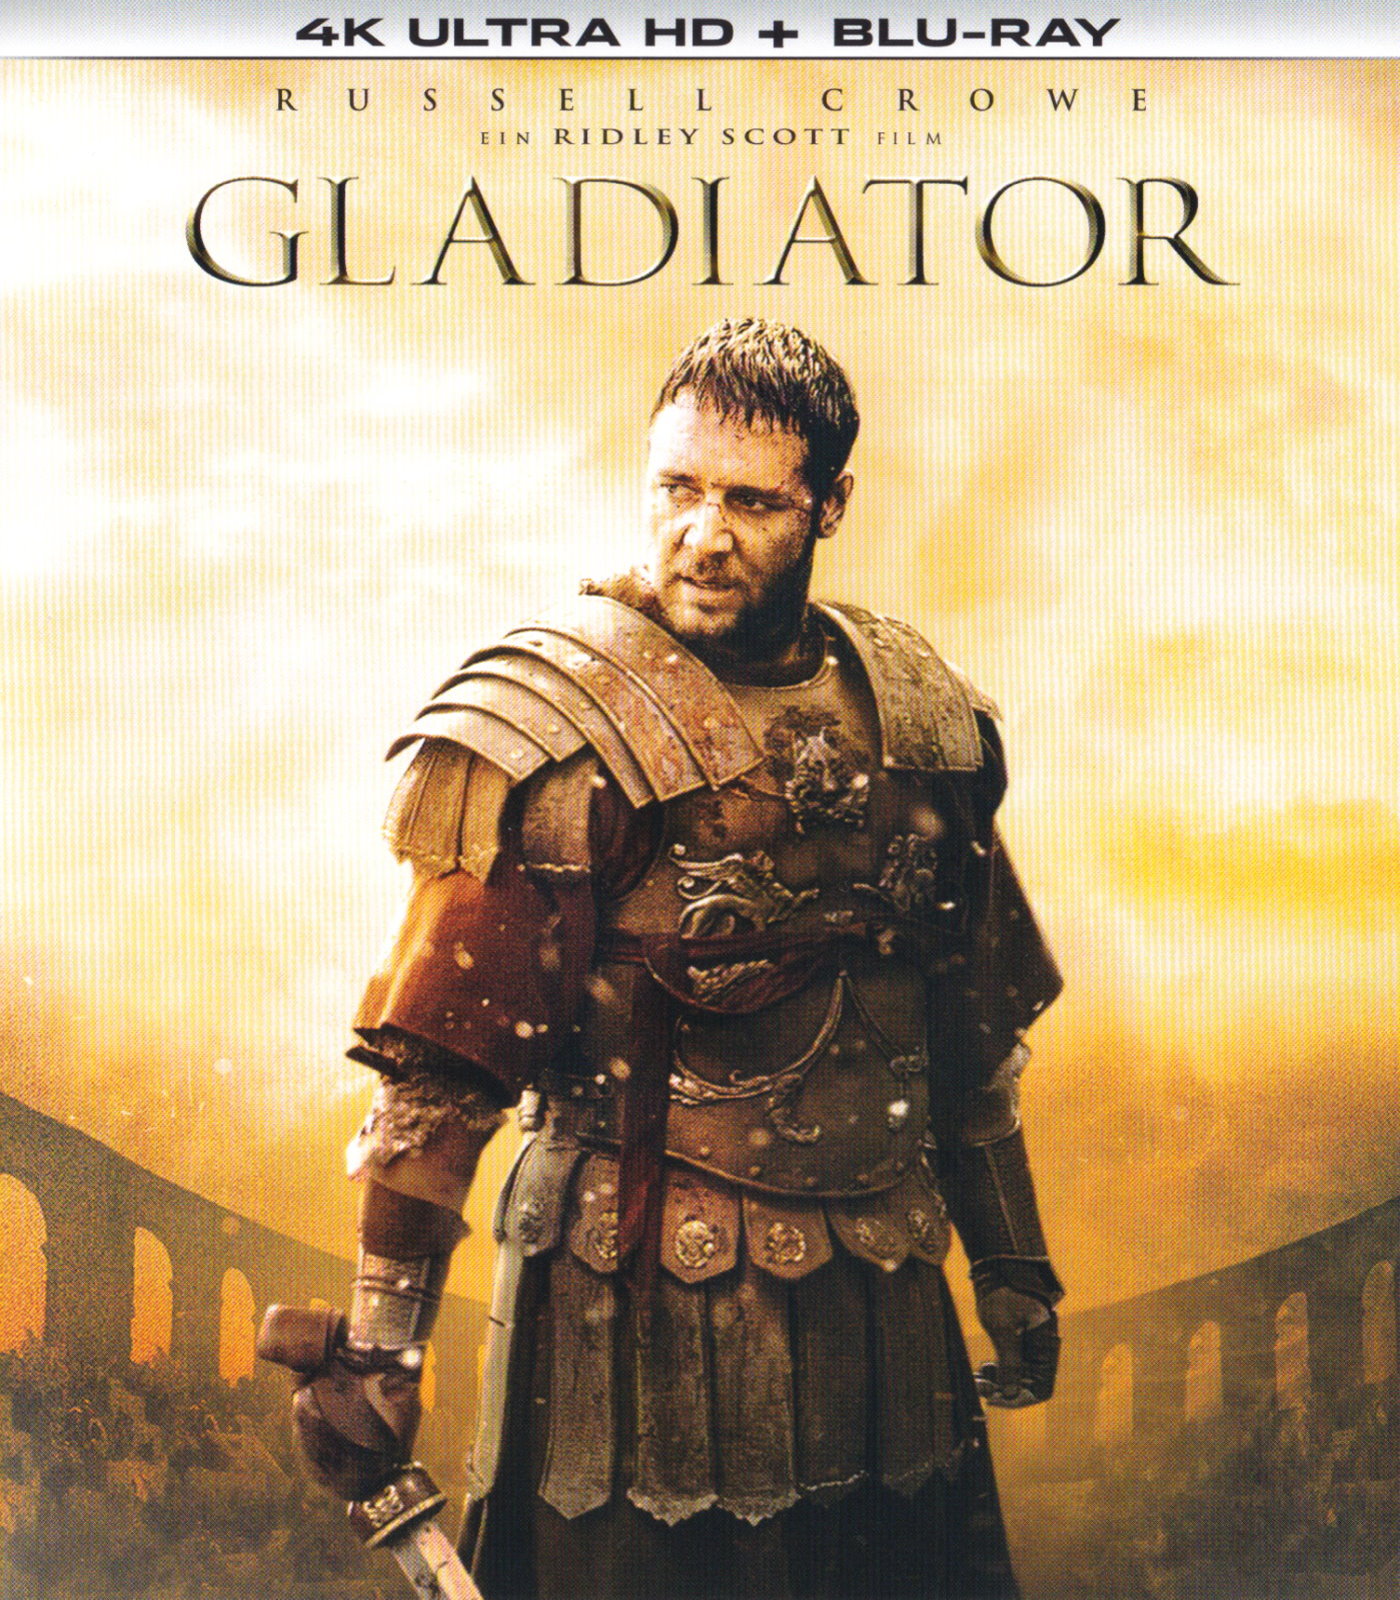 Cover - Gladiator.jpg